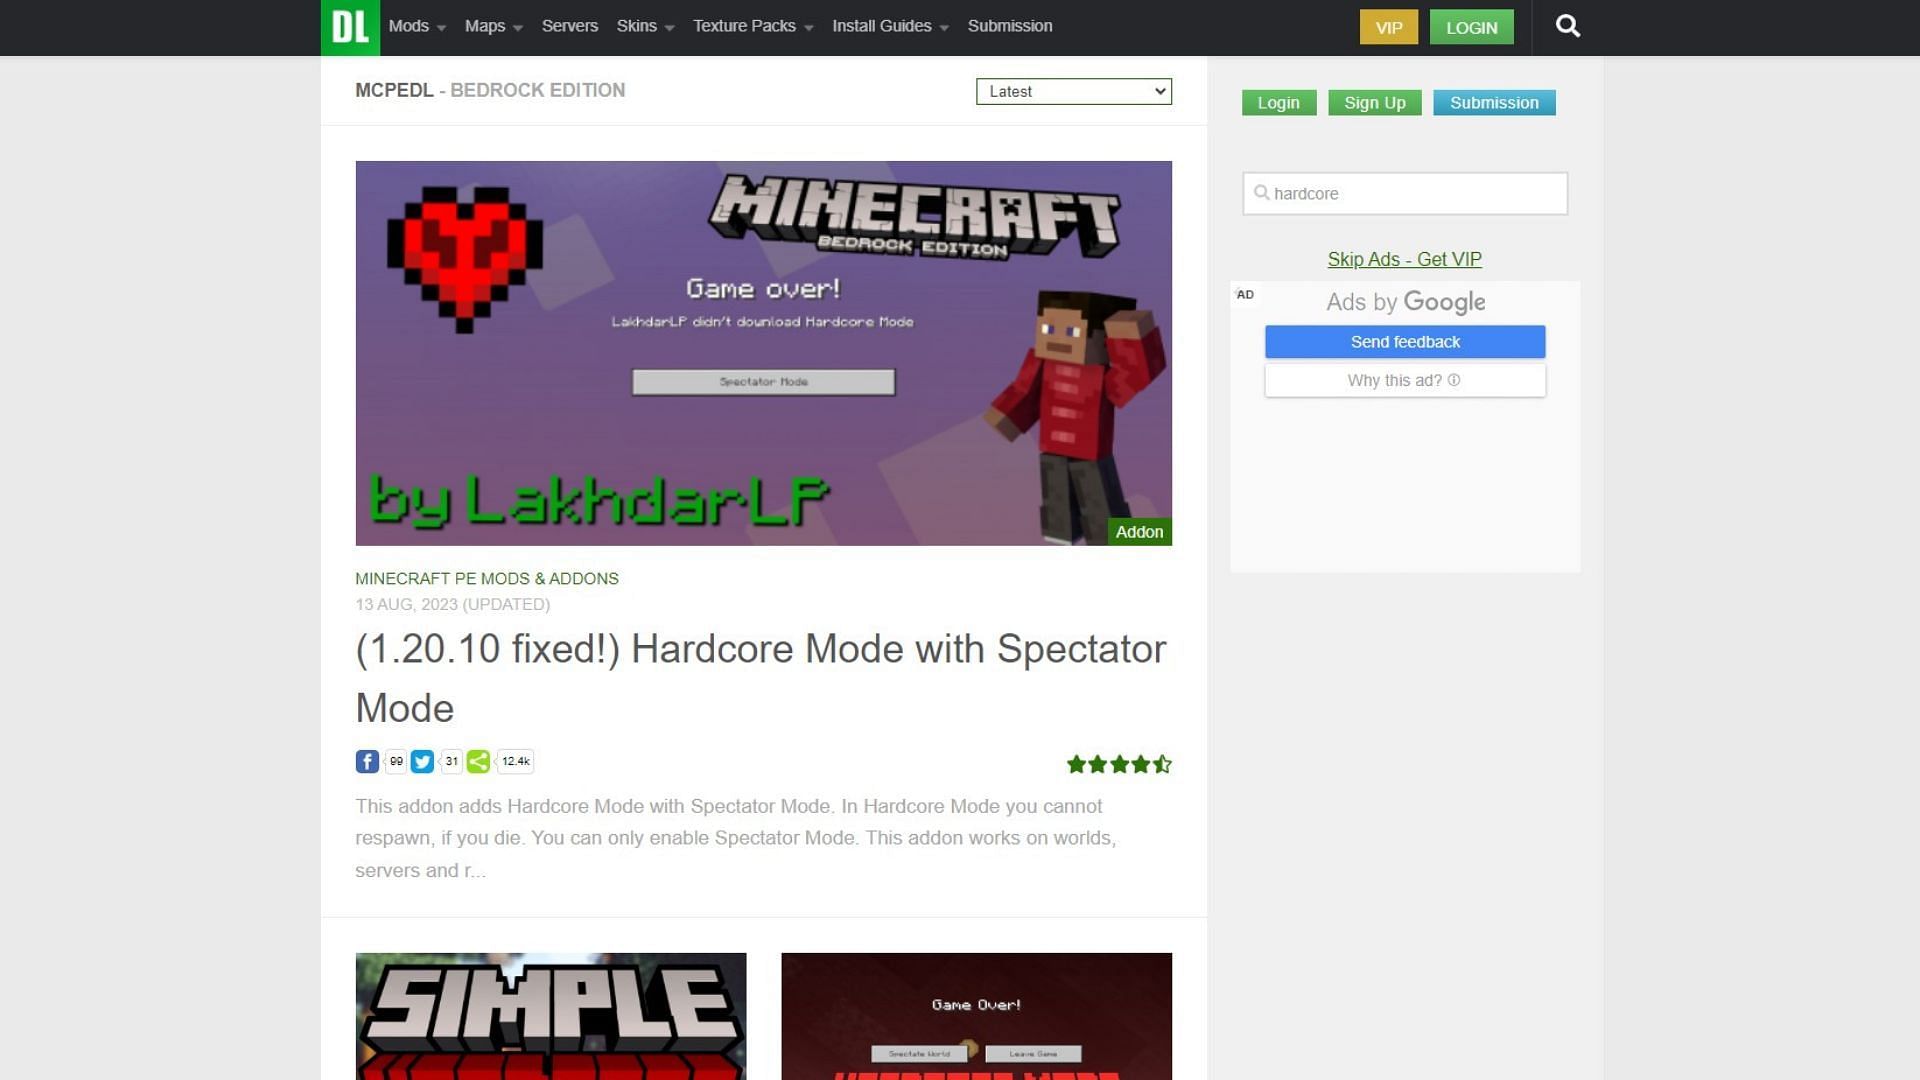 Minecraft Hardcore mode add-on for Bedrock edition (Image via mcpedl.com)